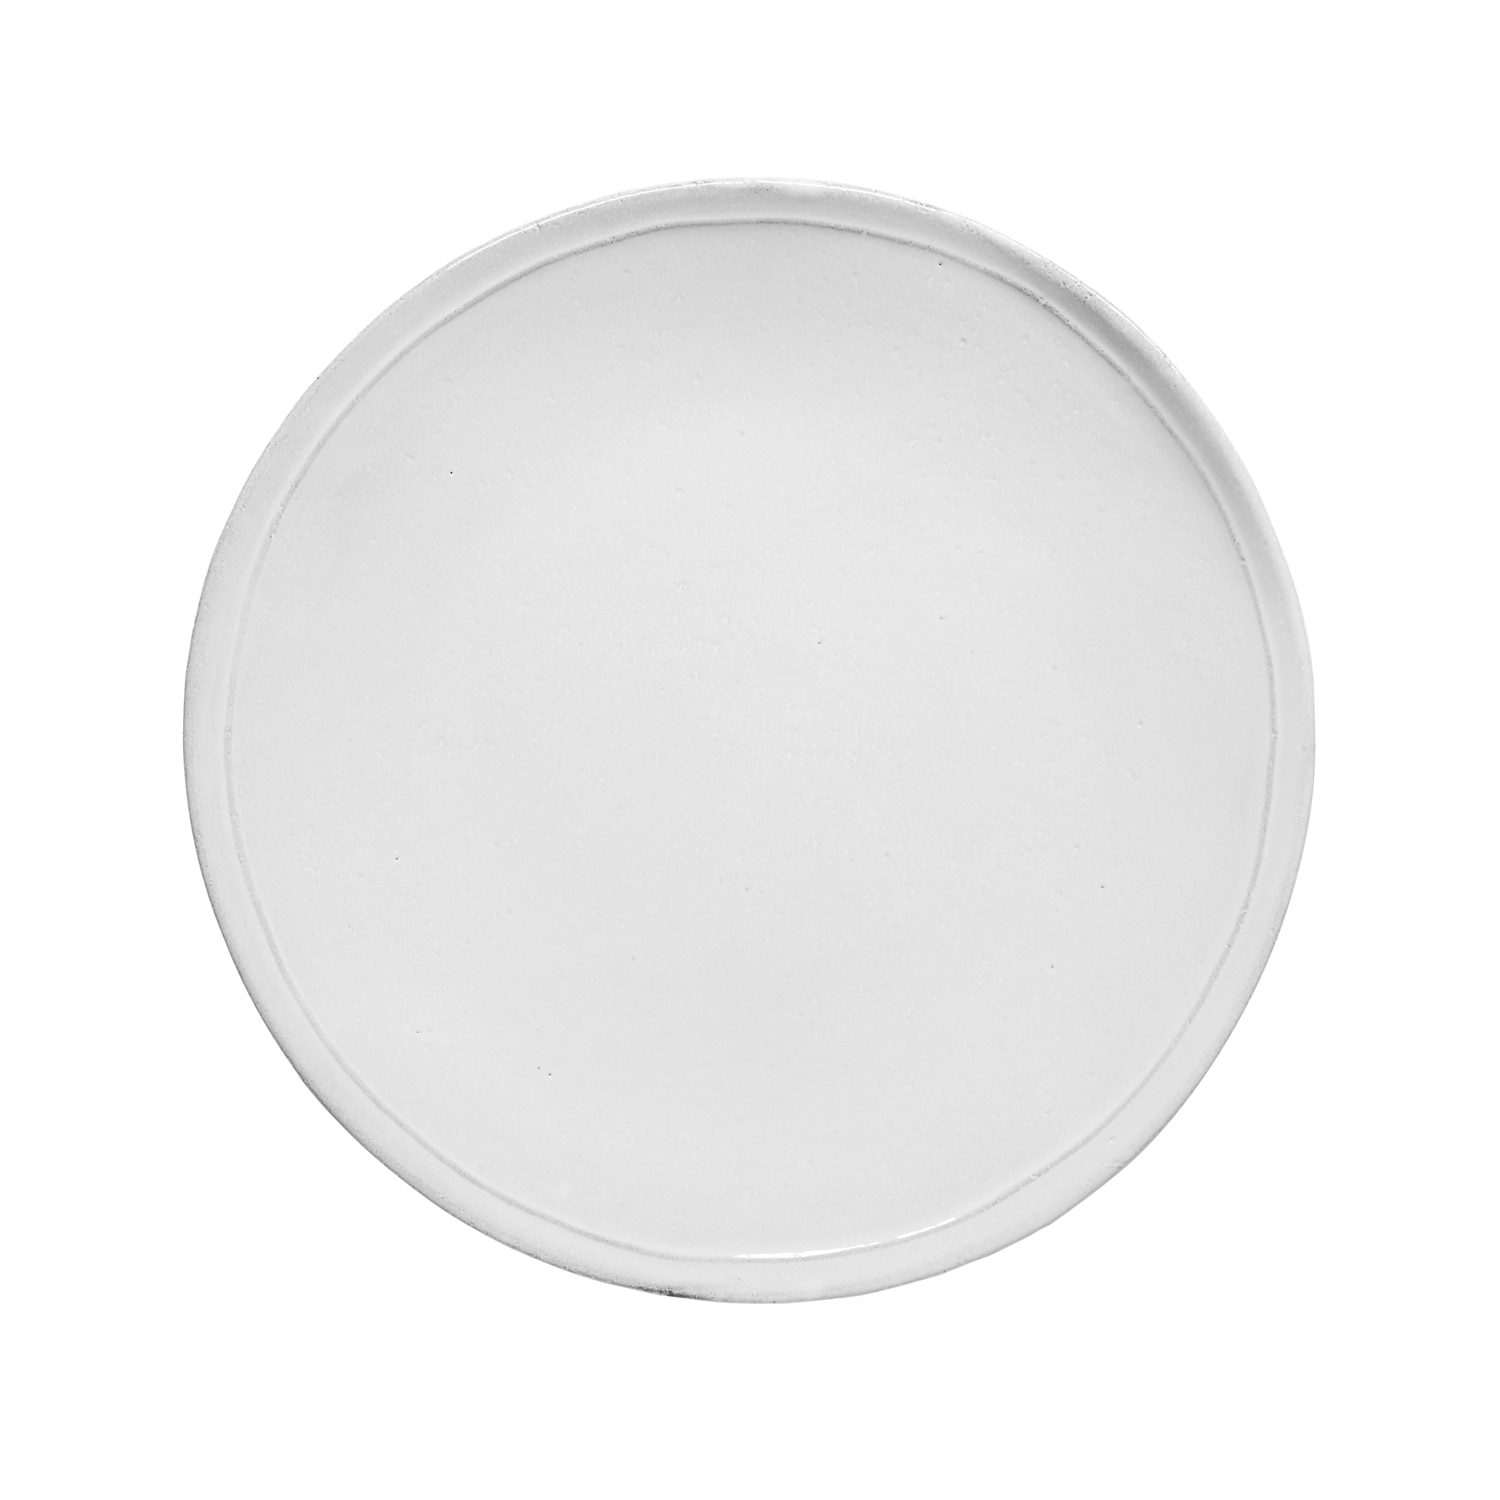 [Simple] Very Large Dinner Plate